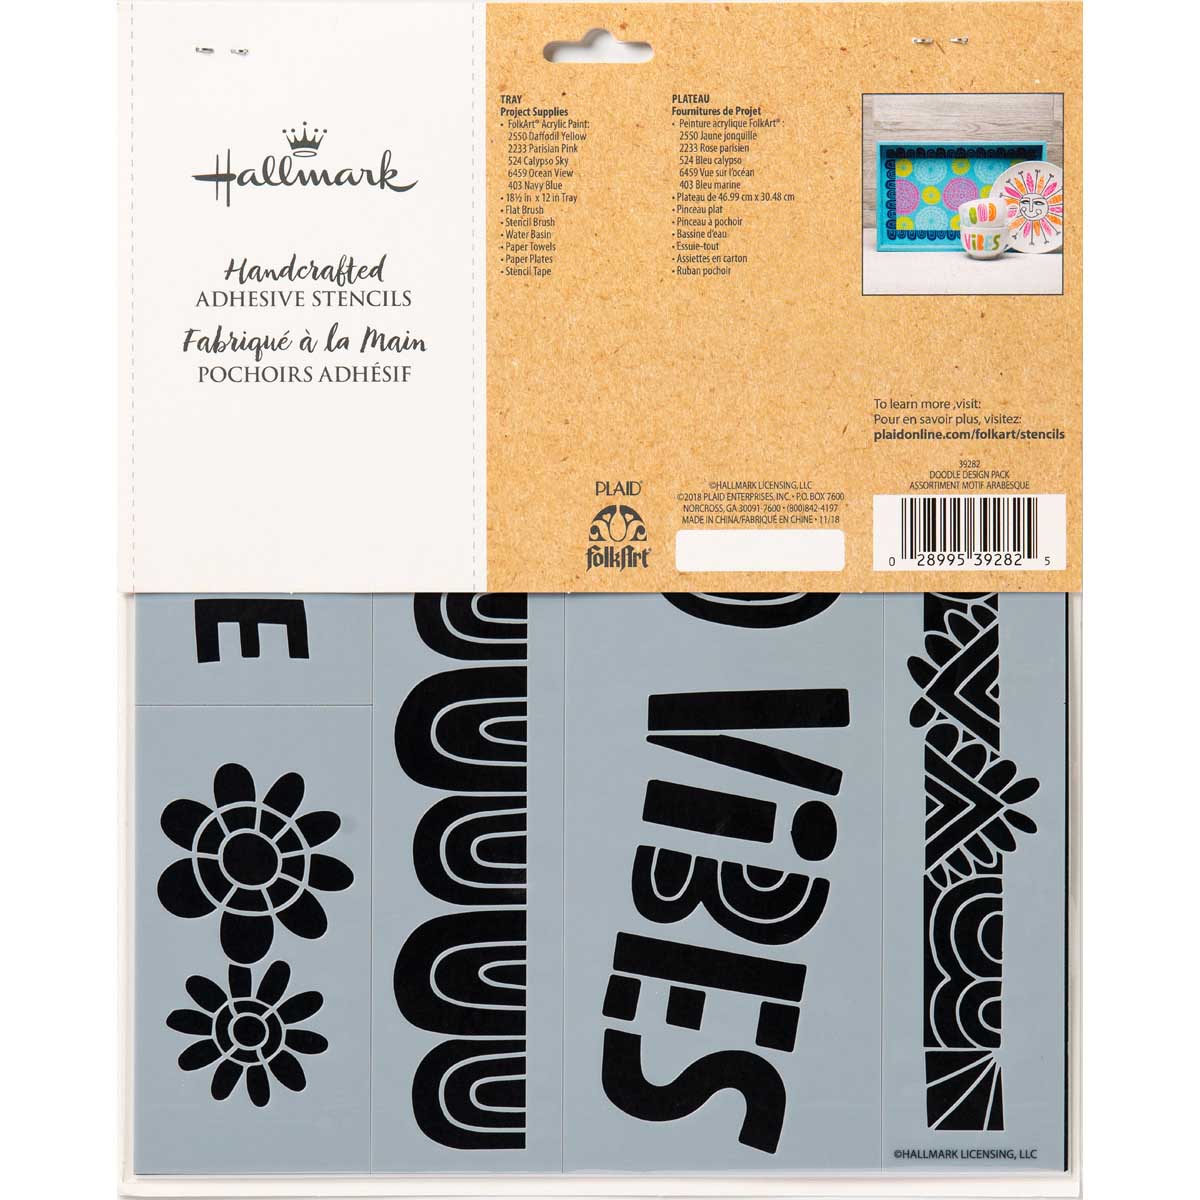 Hallmark Handcrafted Adhesive Stencils - Doodle Design Pack, 8-1/2